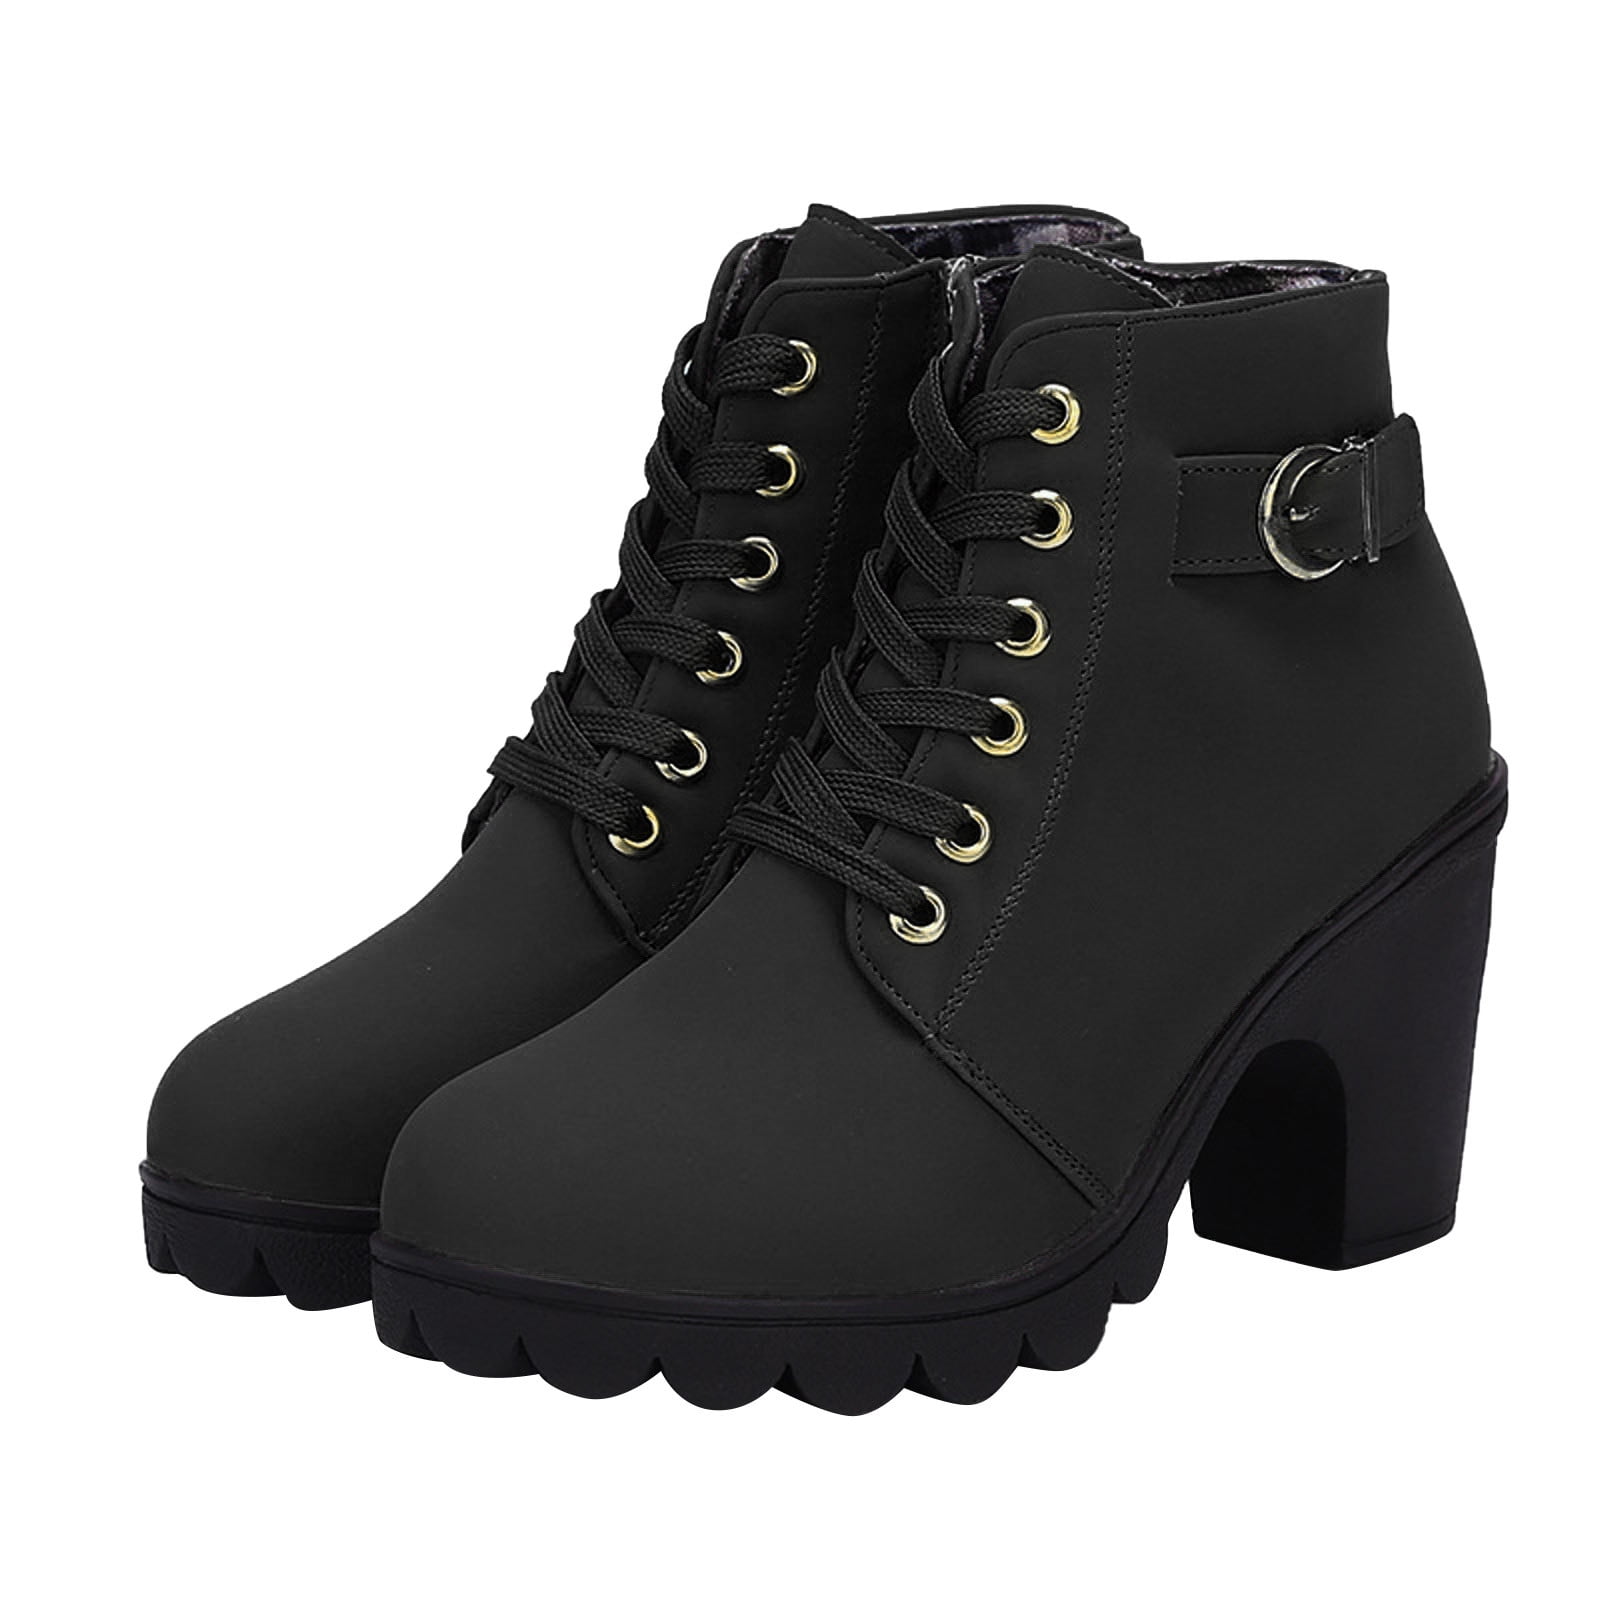 JOSEF SEIBEL Knee High Heeled Womens Boots Size 6 EU 36 Black Buckle Slouch  - $43 - From Fmm